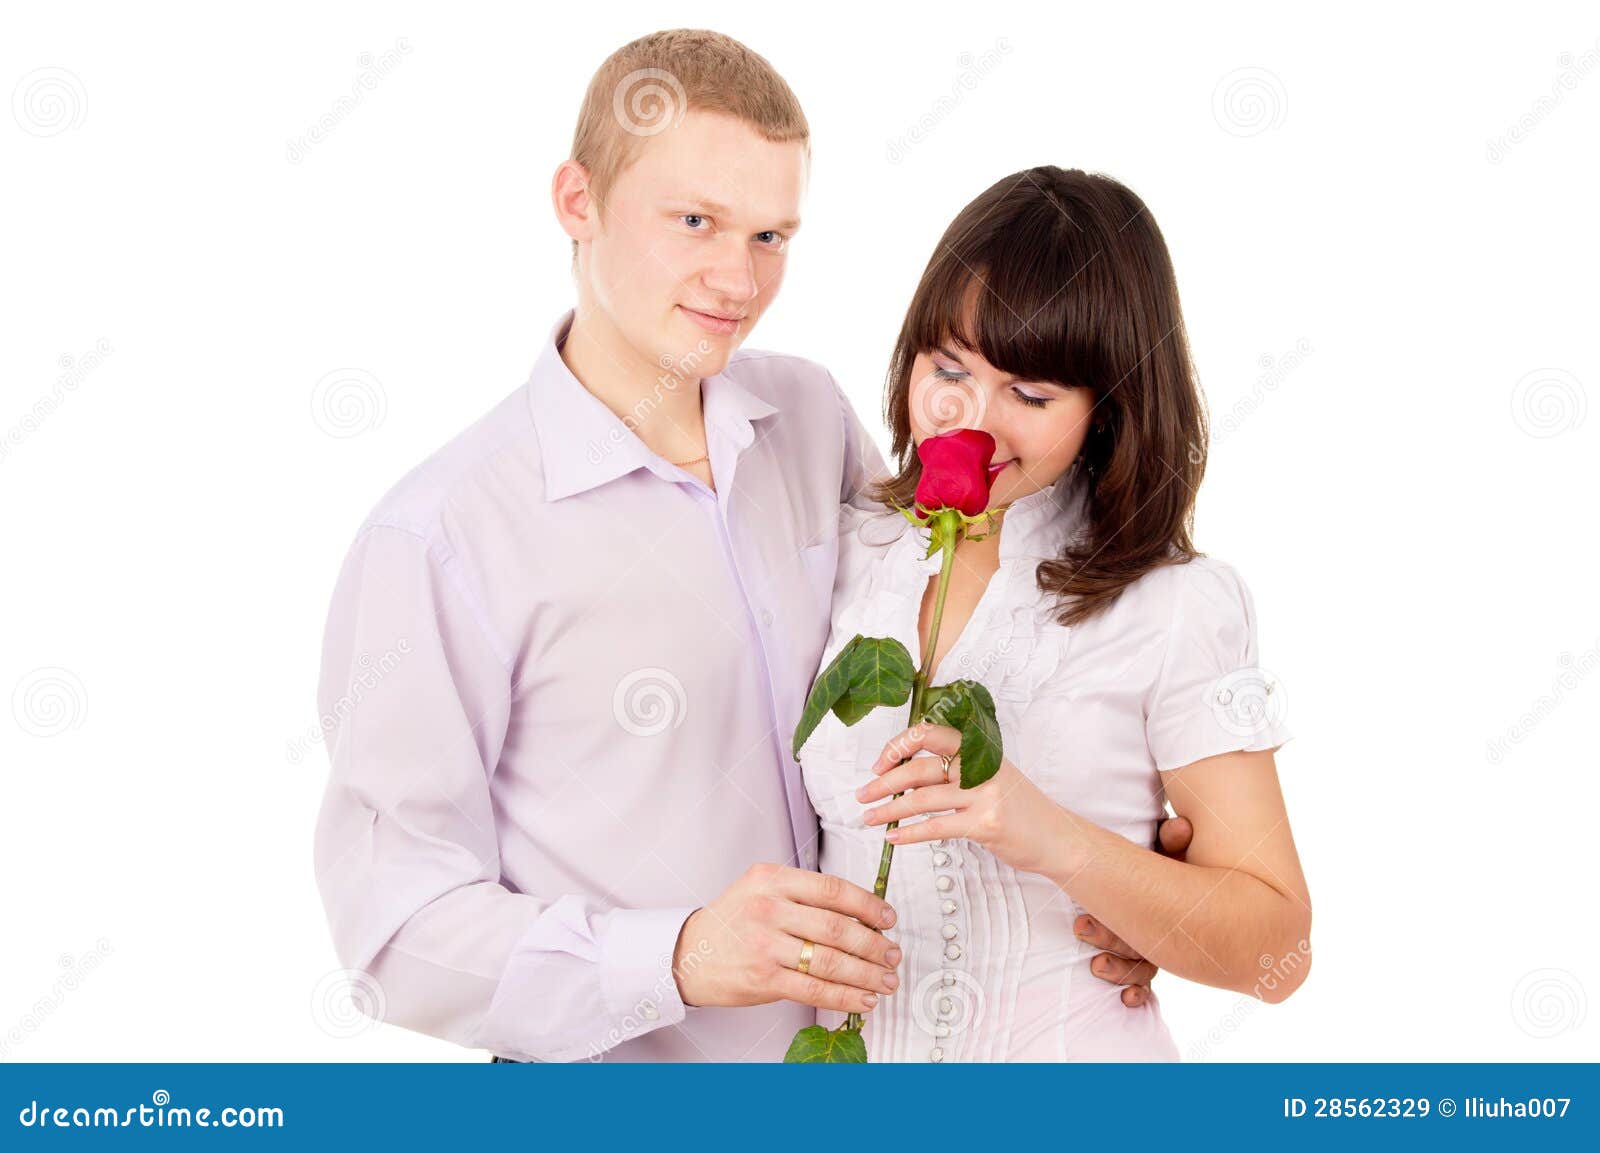 https://thumbs.dreamstime.com/z/guy-gives-girl-rose-makes-proposal-28562329.jpg